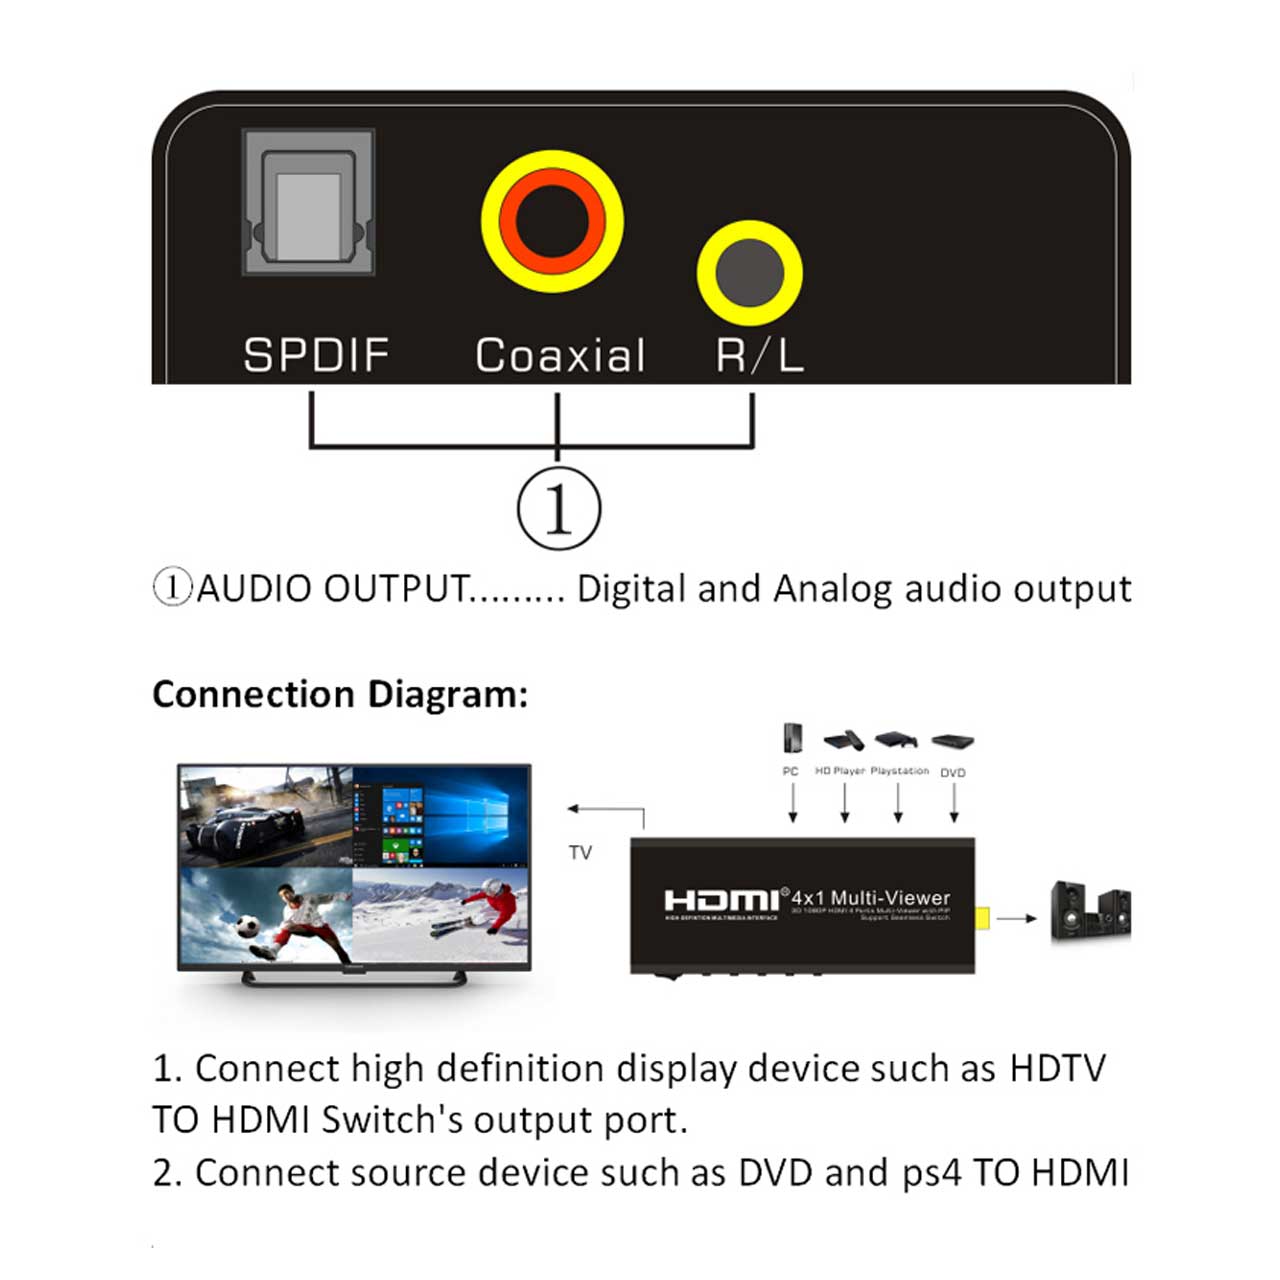 HDMI 4x1 Mulit-Viewer - AYS-41V13